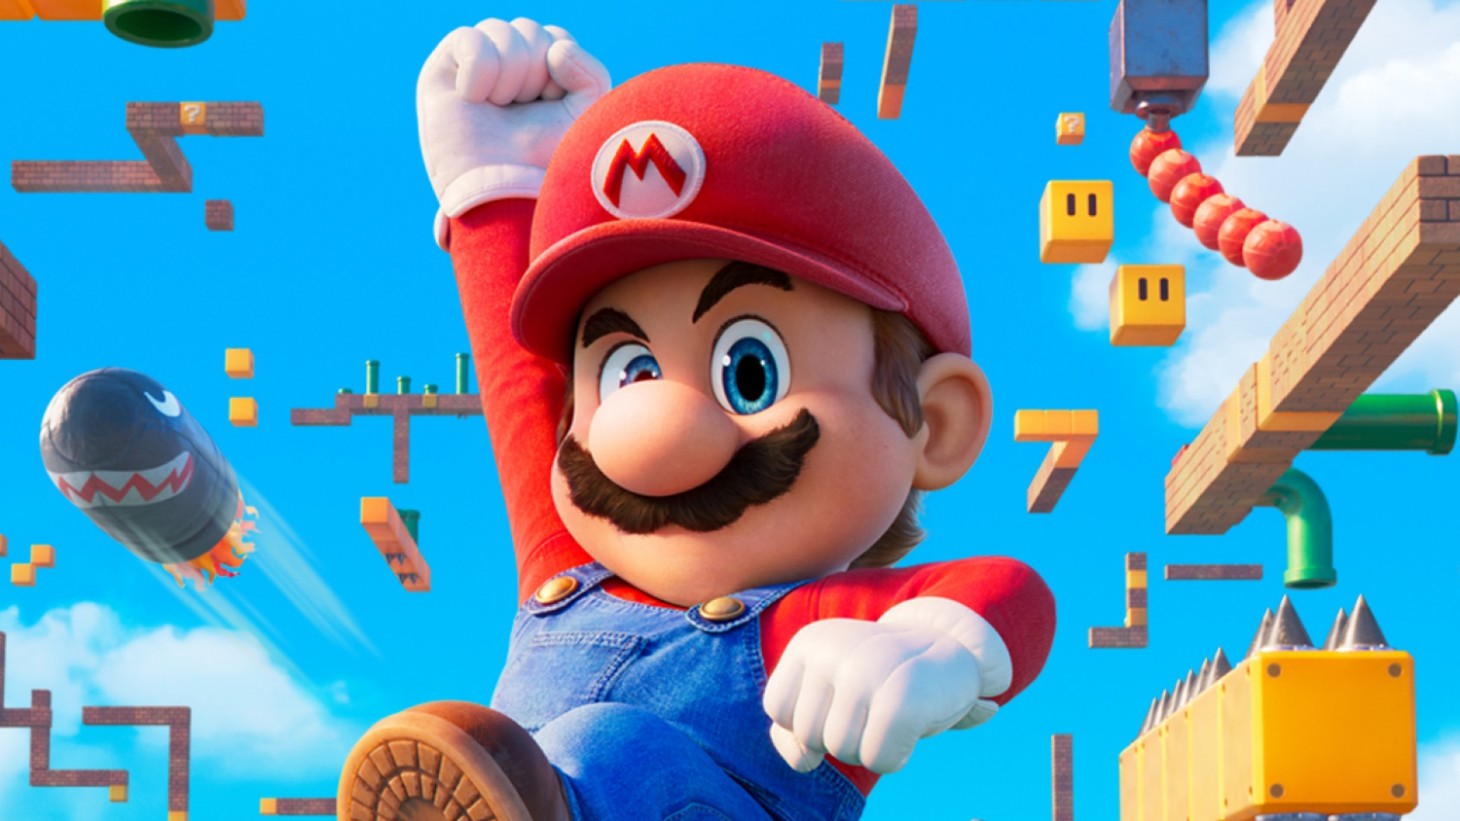 The Super Mario Bros Movie Official Trailer 